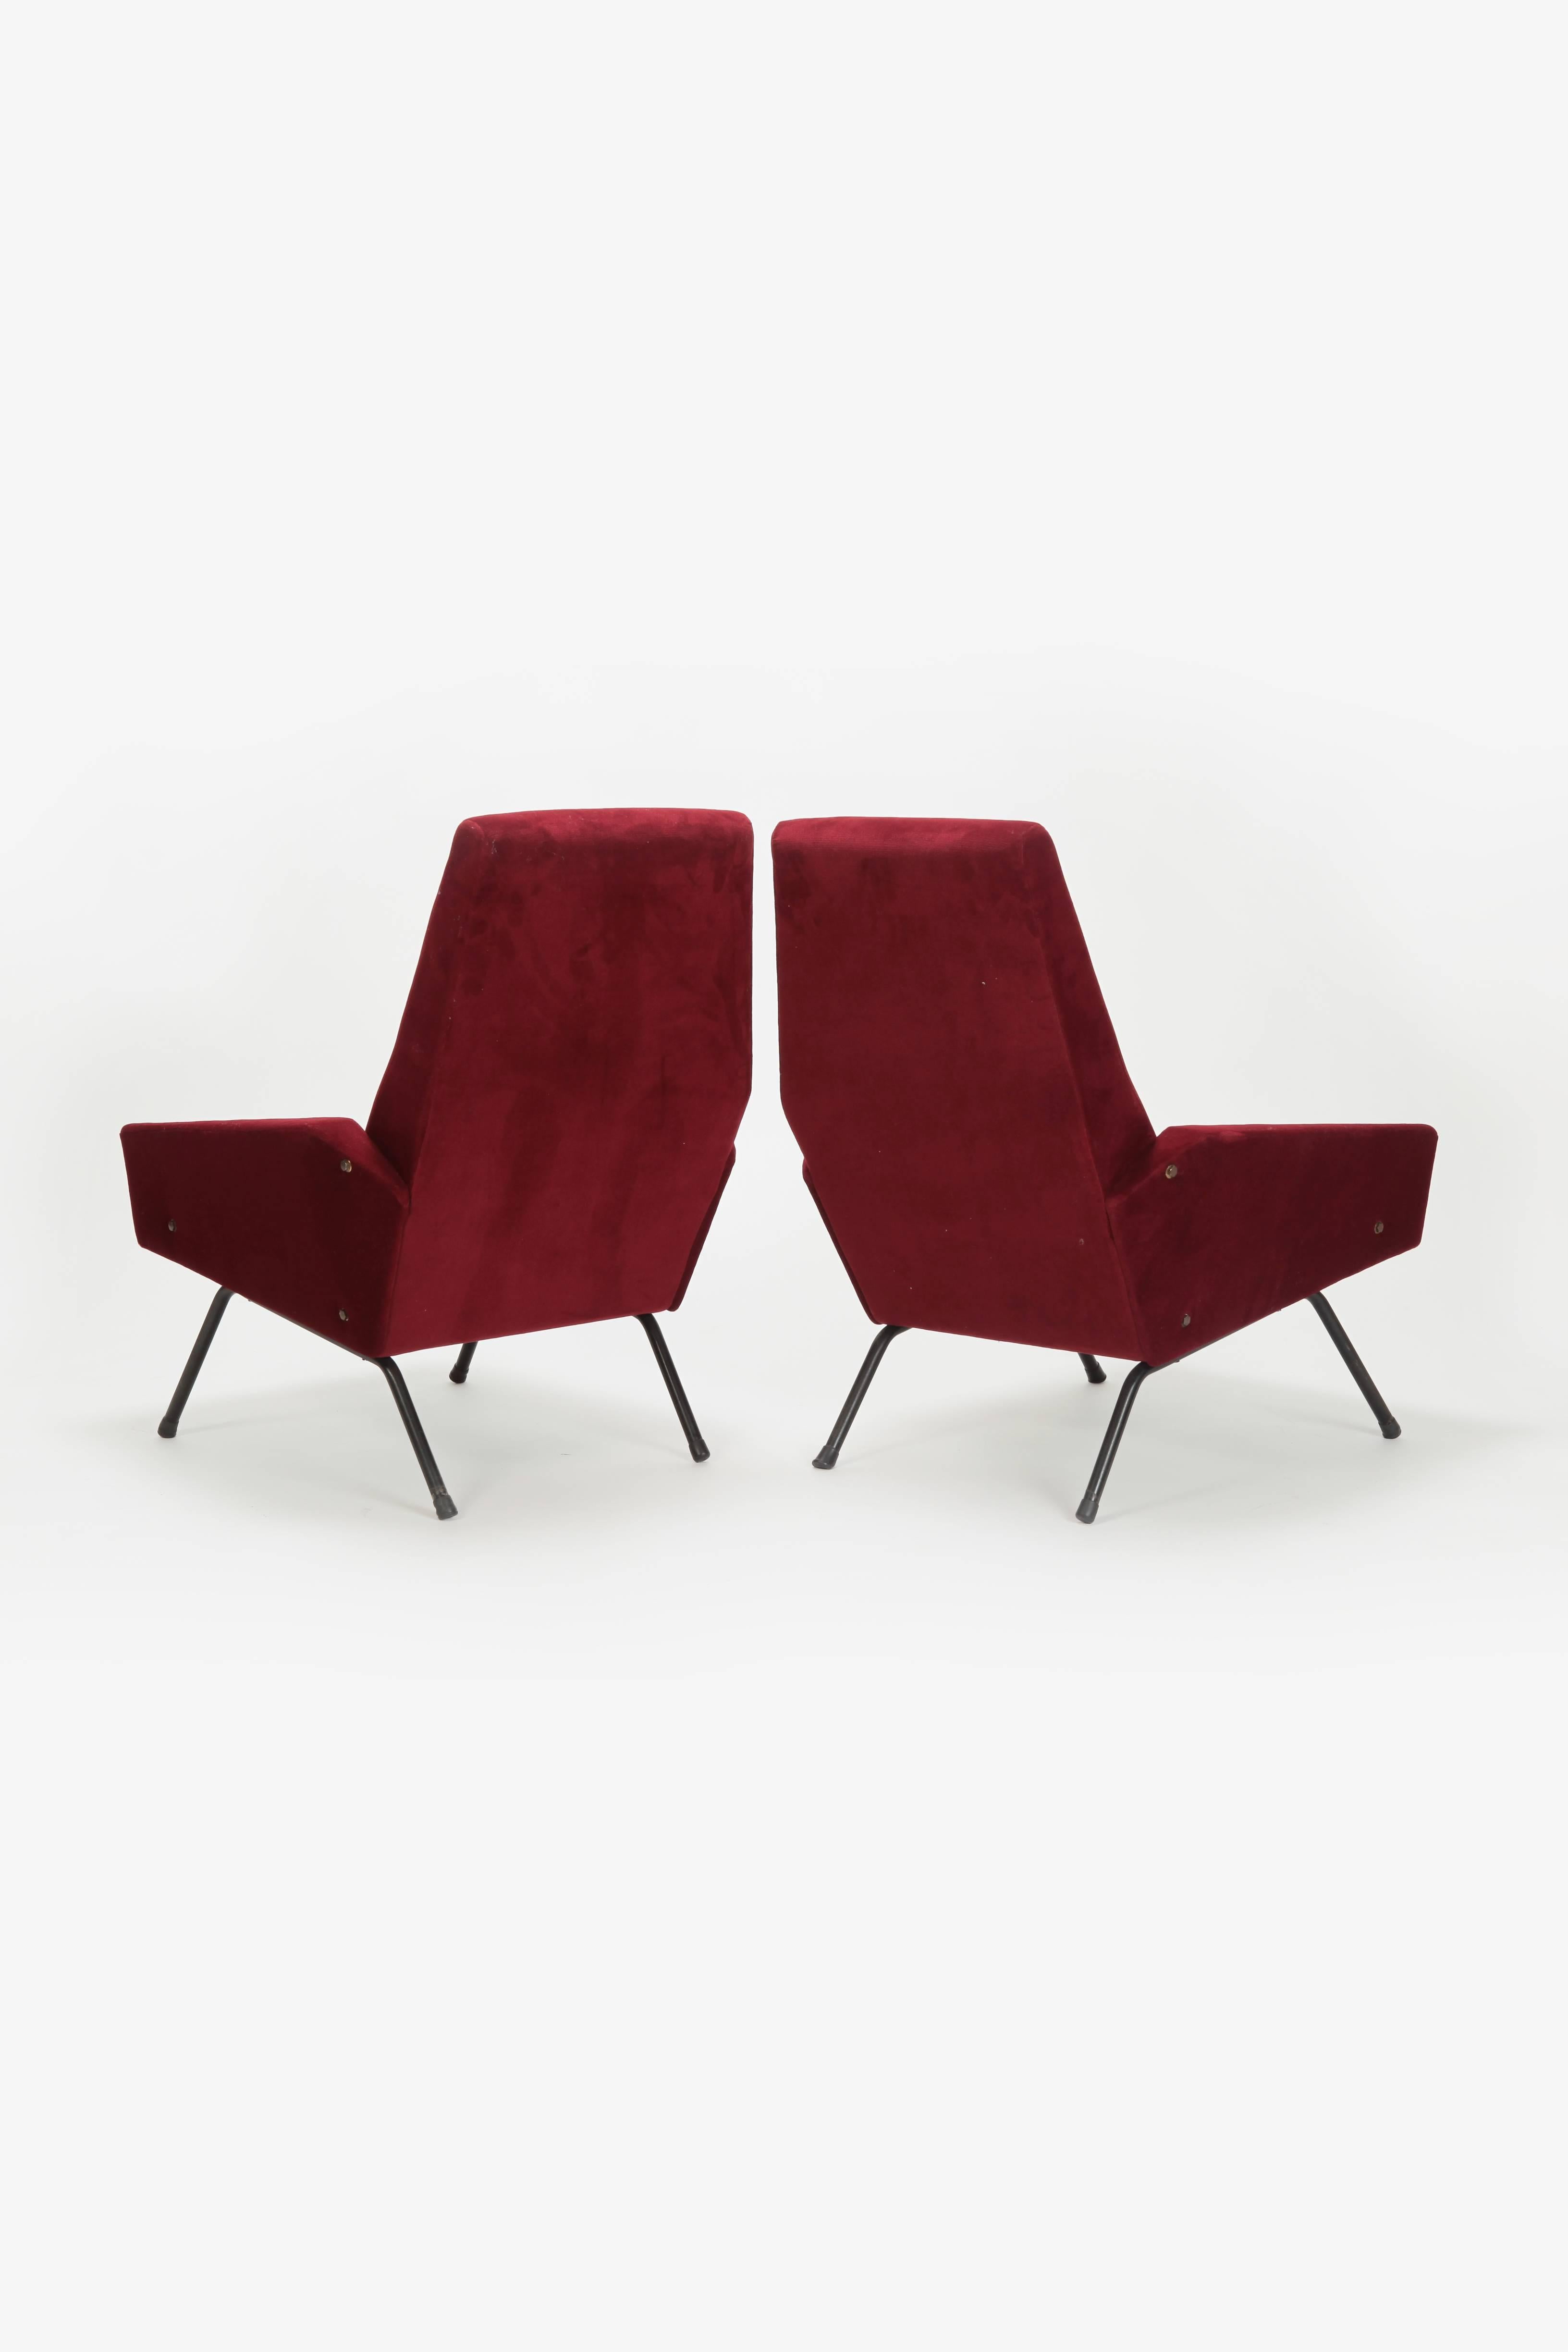 Mid-Century Modern Pair of Gianfranco Frattini Velor Chairs, 1950s